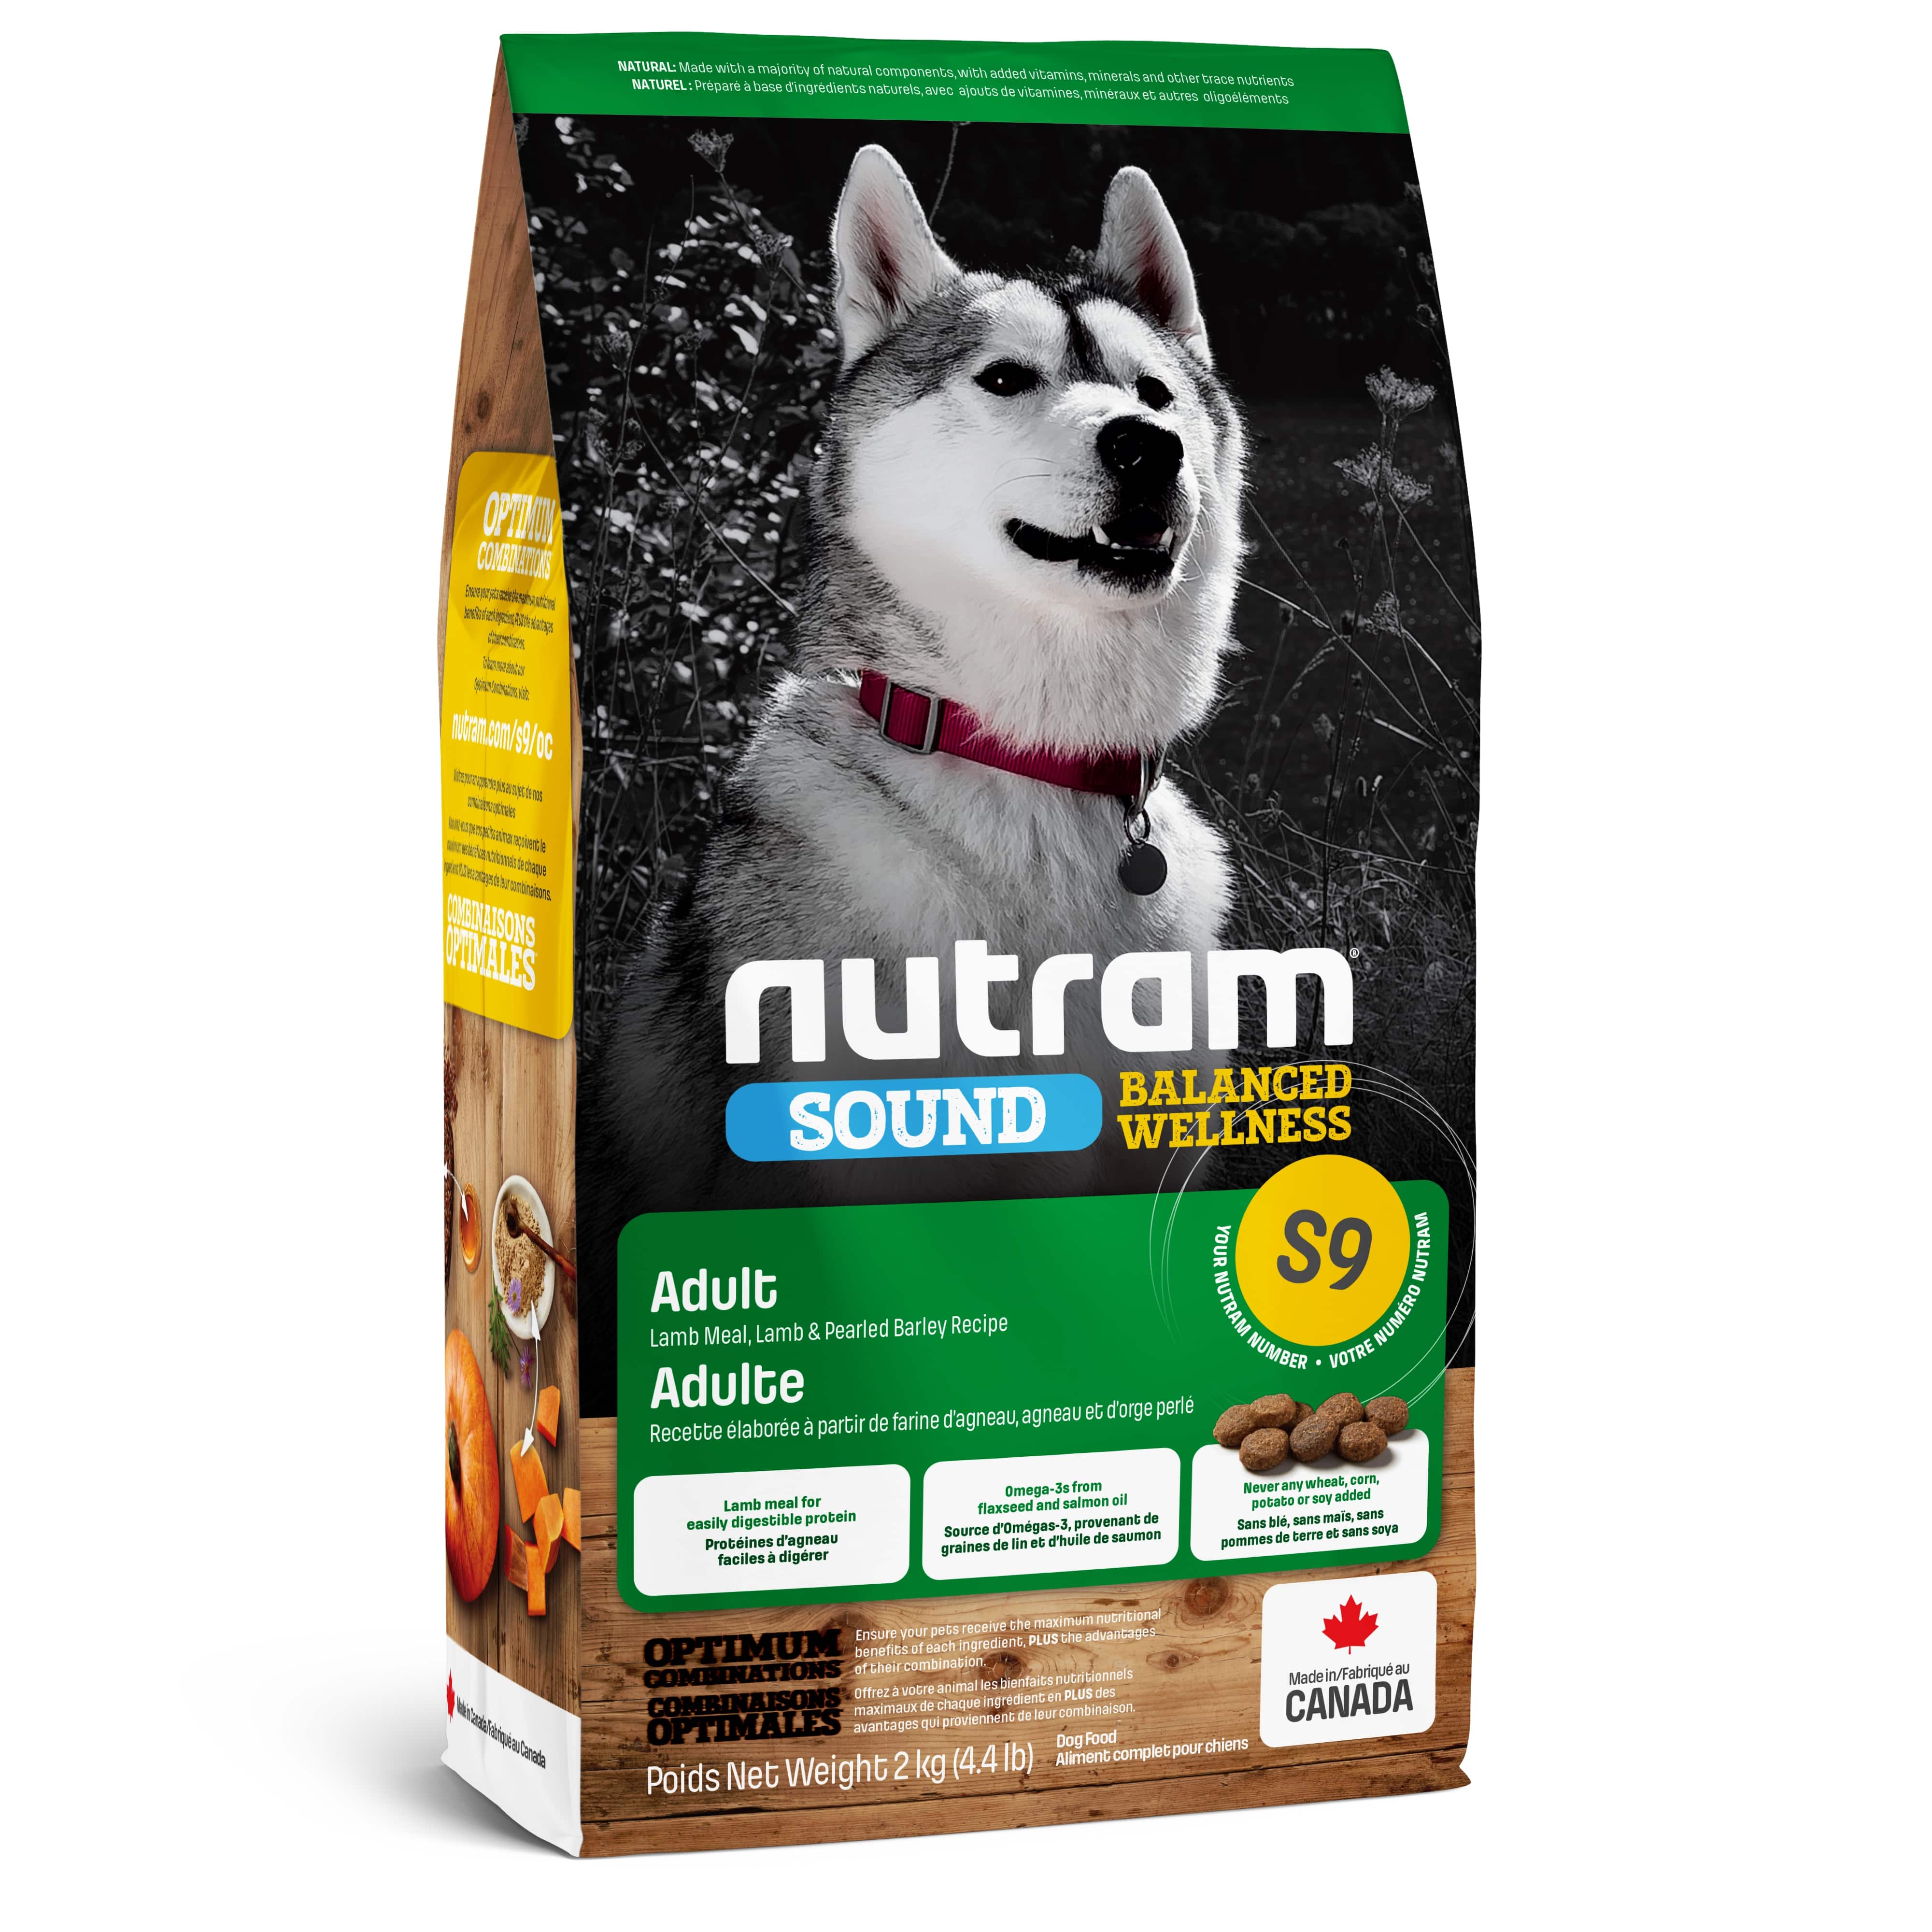 S9 Nutram Sound Balanced Wellness® Natural Lamb & Pearled Barley Recipe Adult Dog